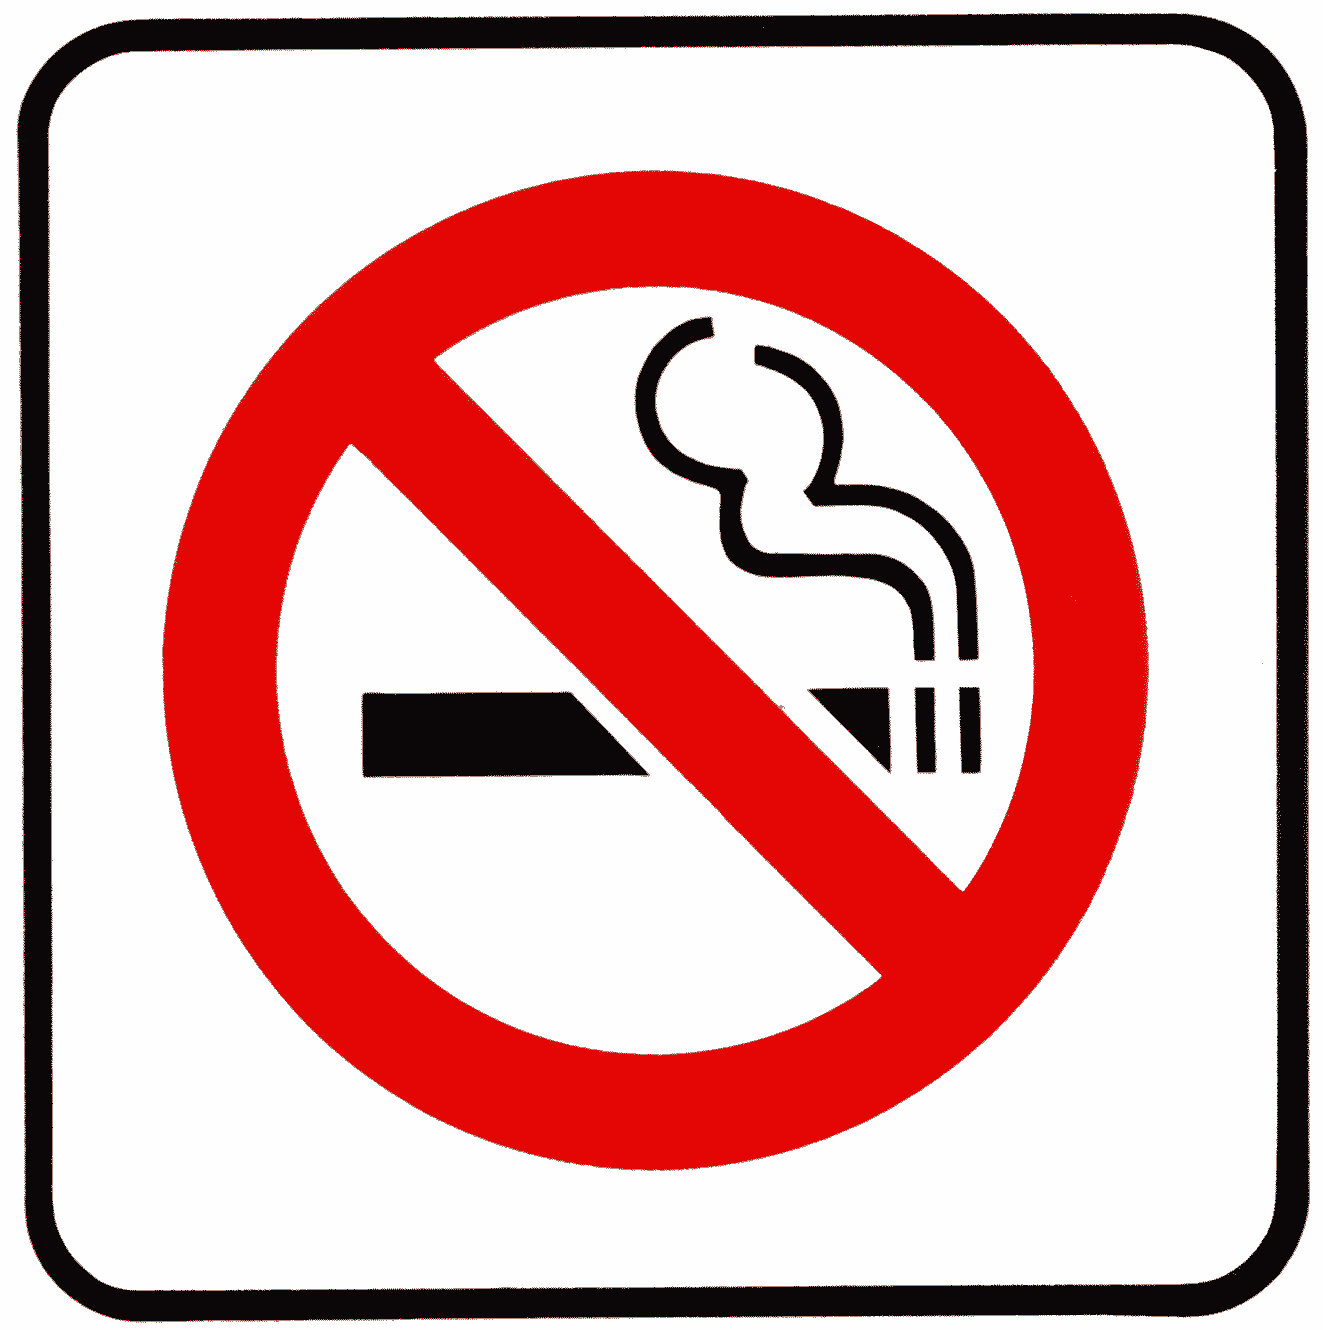 Tag: World No Tobacco Day